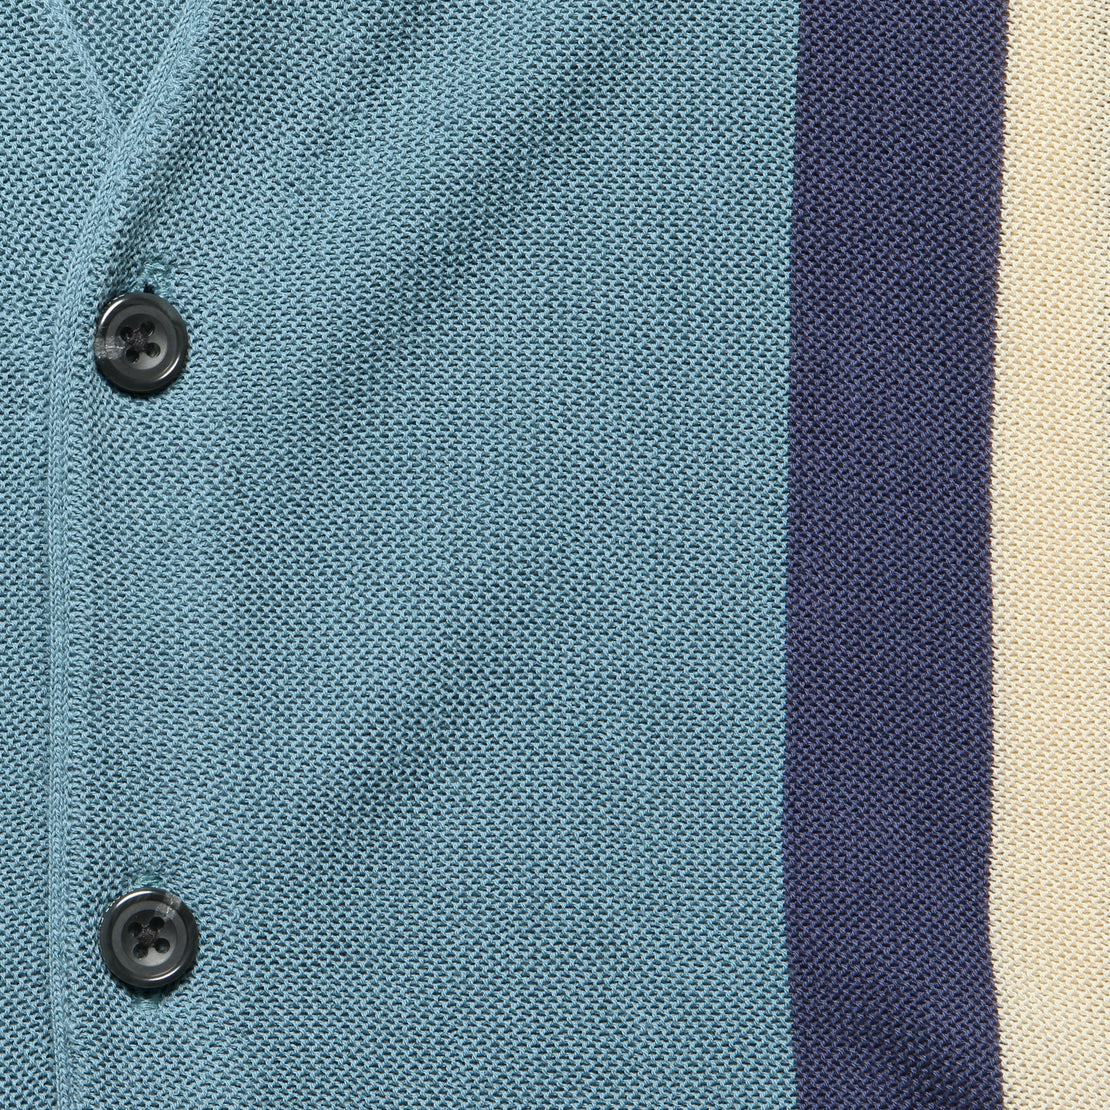 Jacquard Stripe Cardigan - Sax - BEAMS+ - STAG Provisions - Tops - Sweater